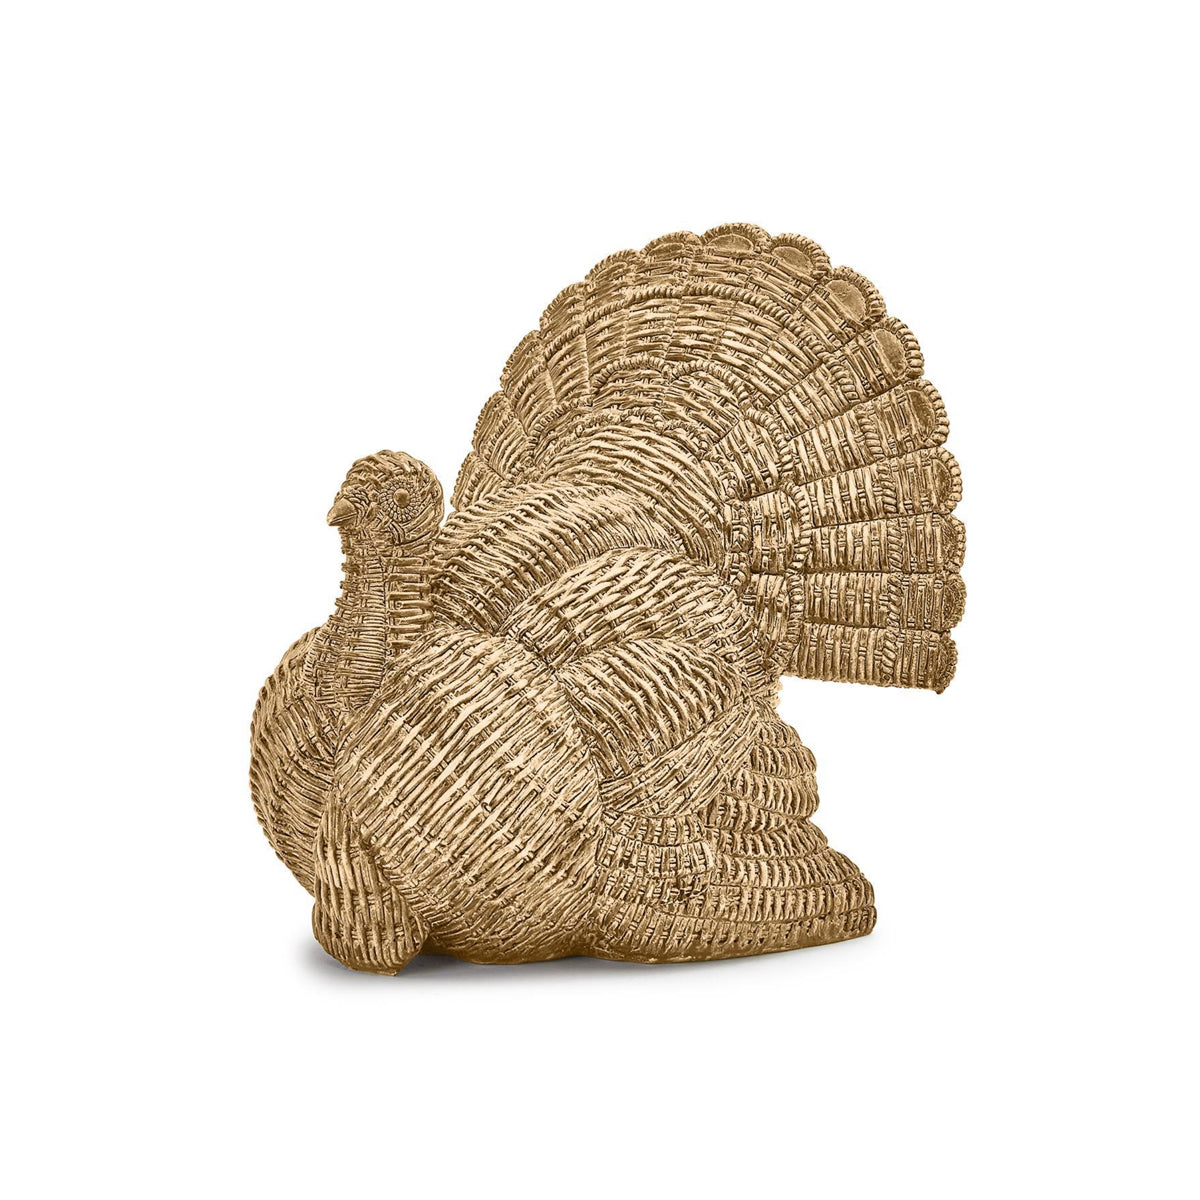 Basketweave Turkey Decor